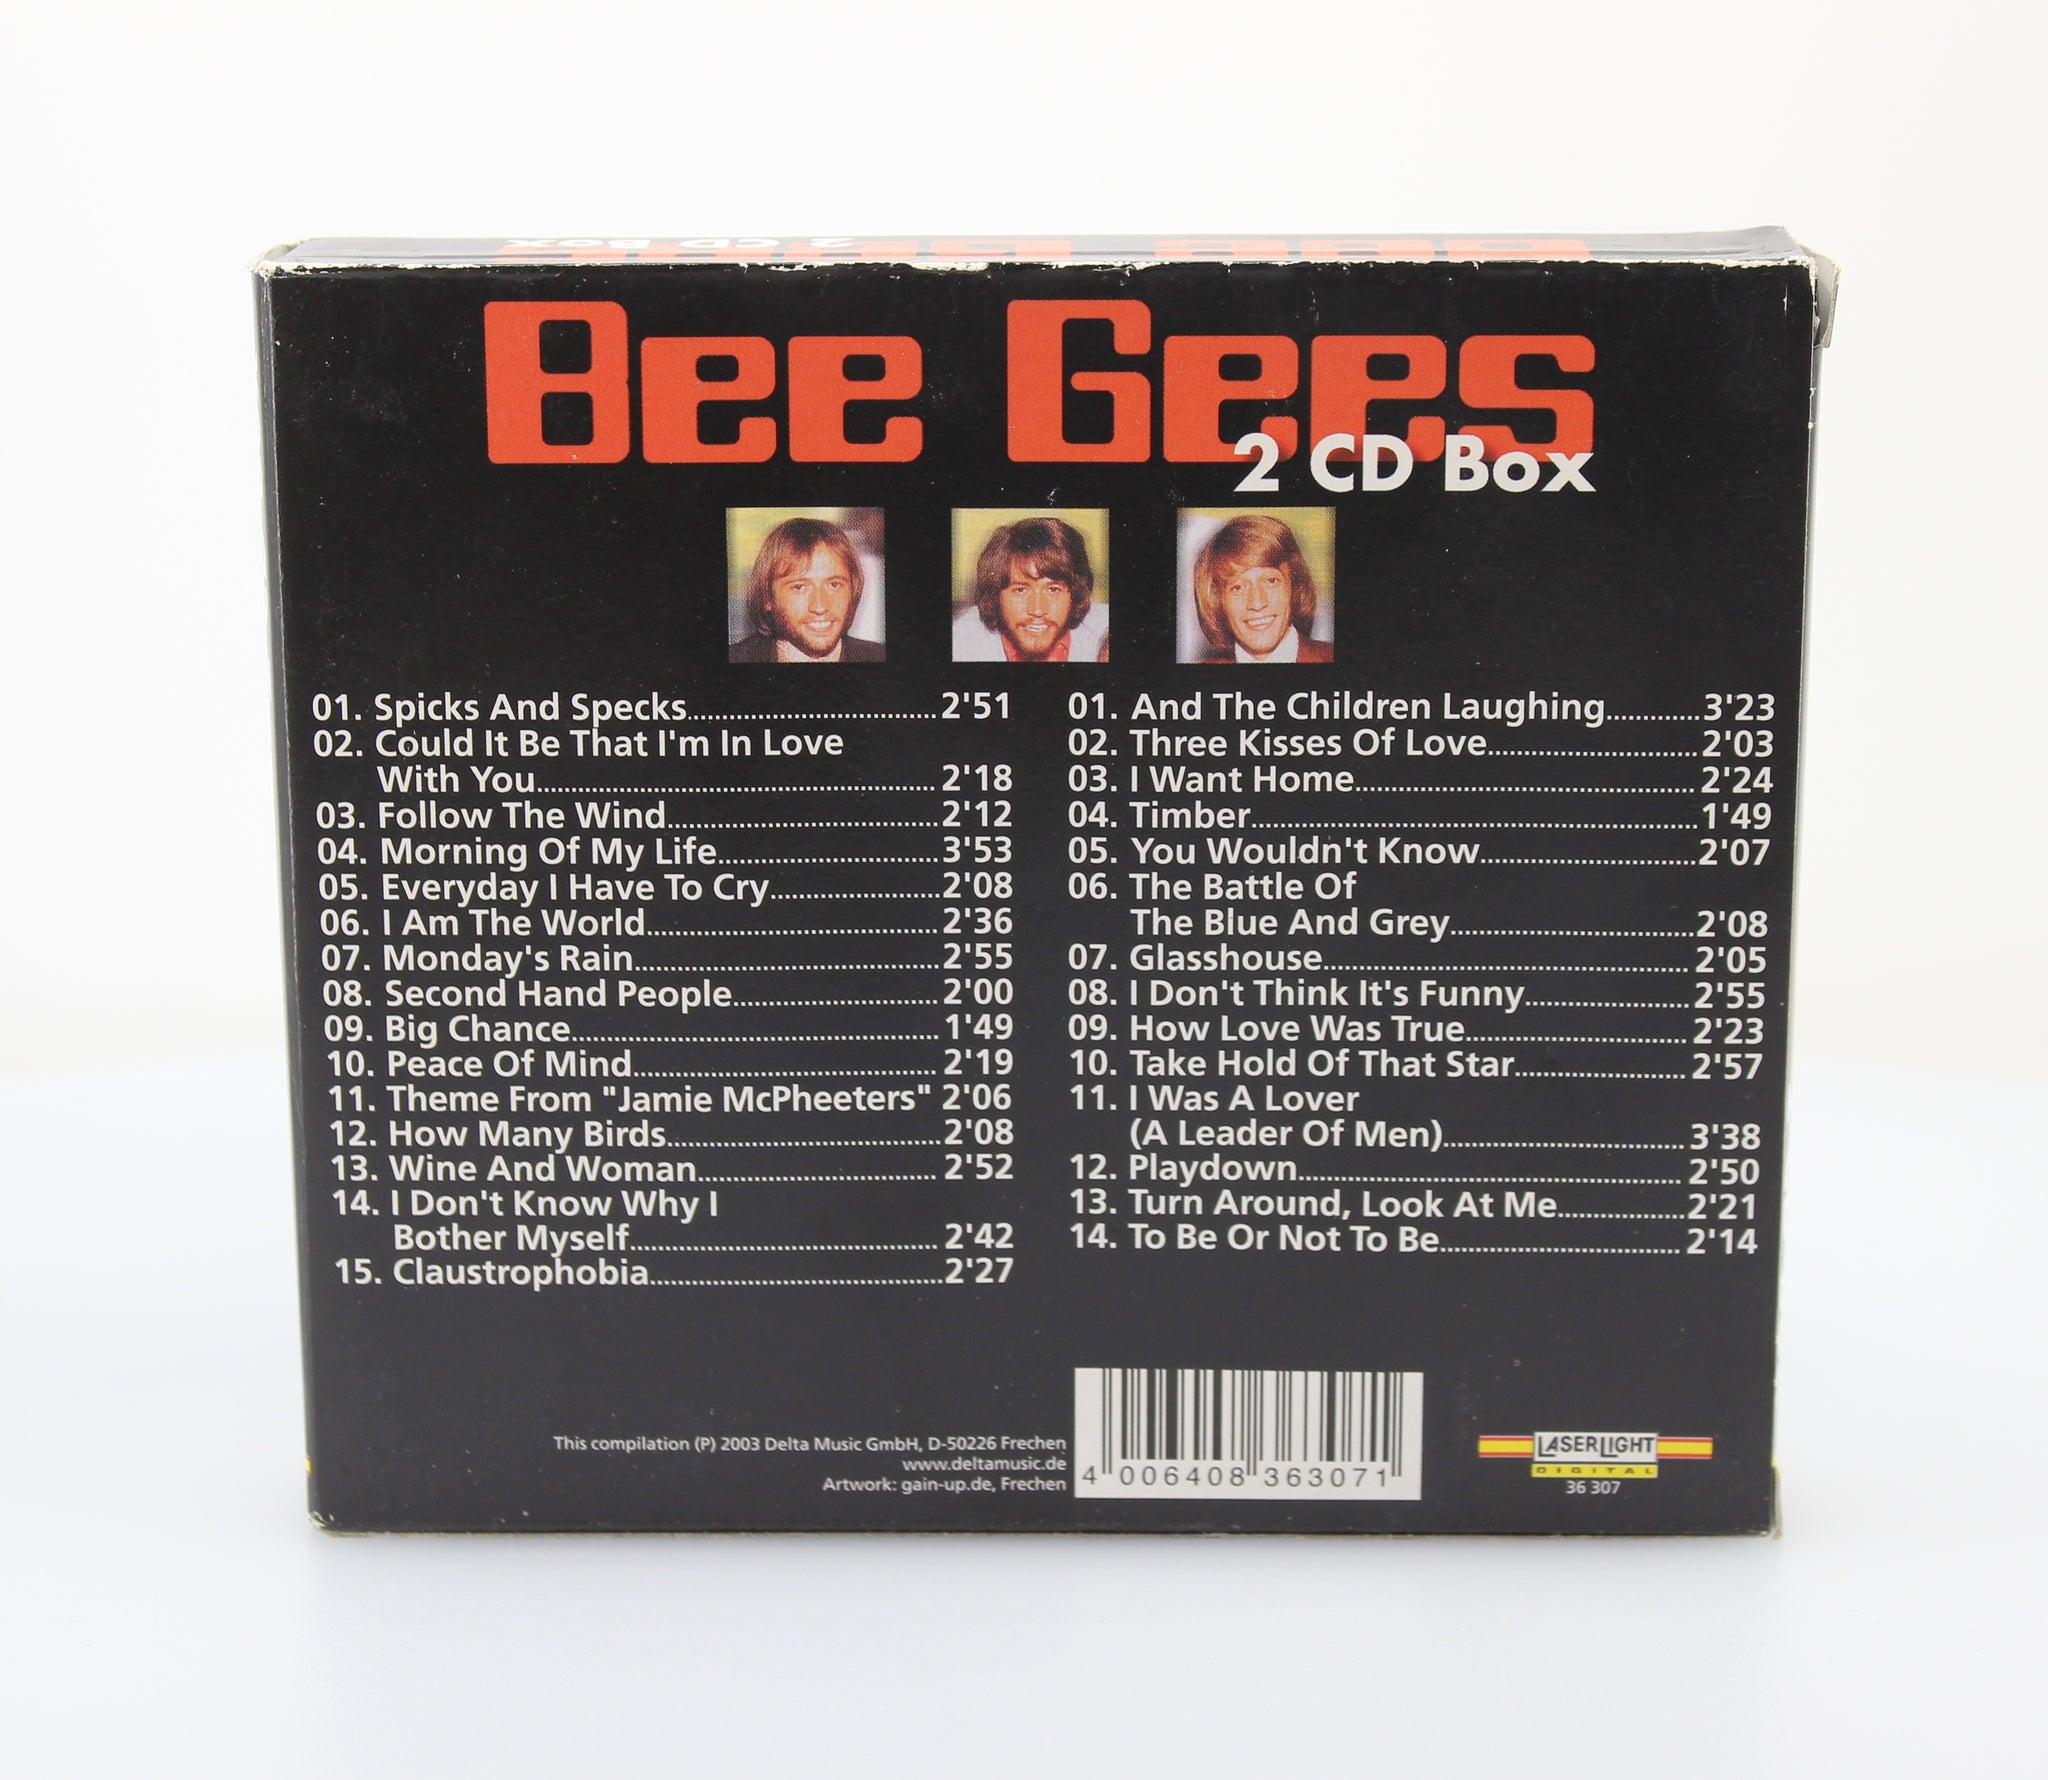 Bee Gees - 2 CD Box, CD, Compilation, Germany 2003 - preciousvinyl